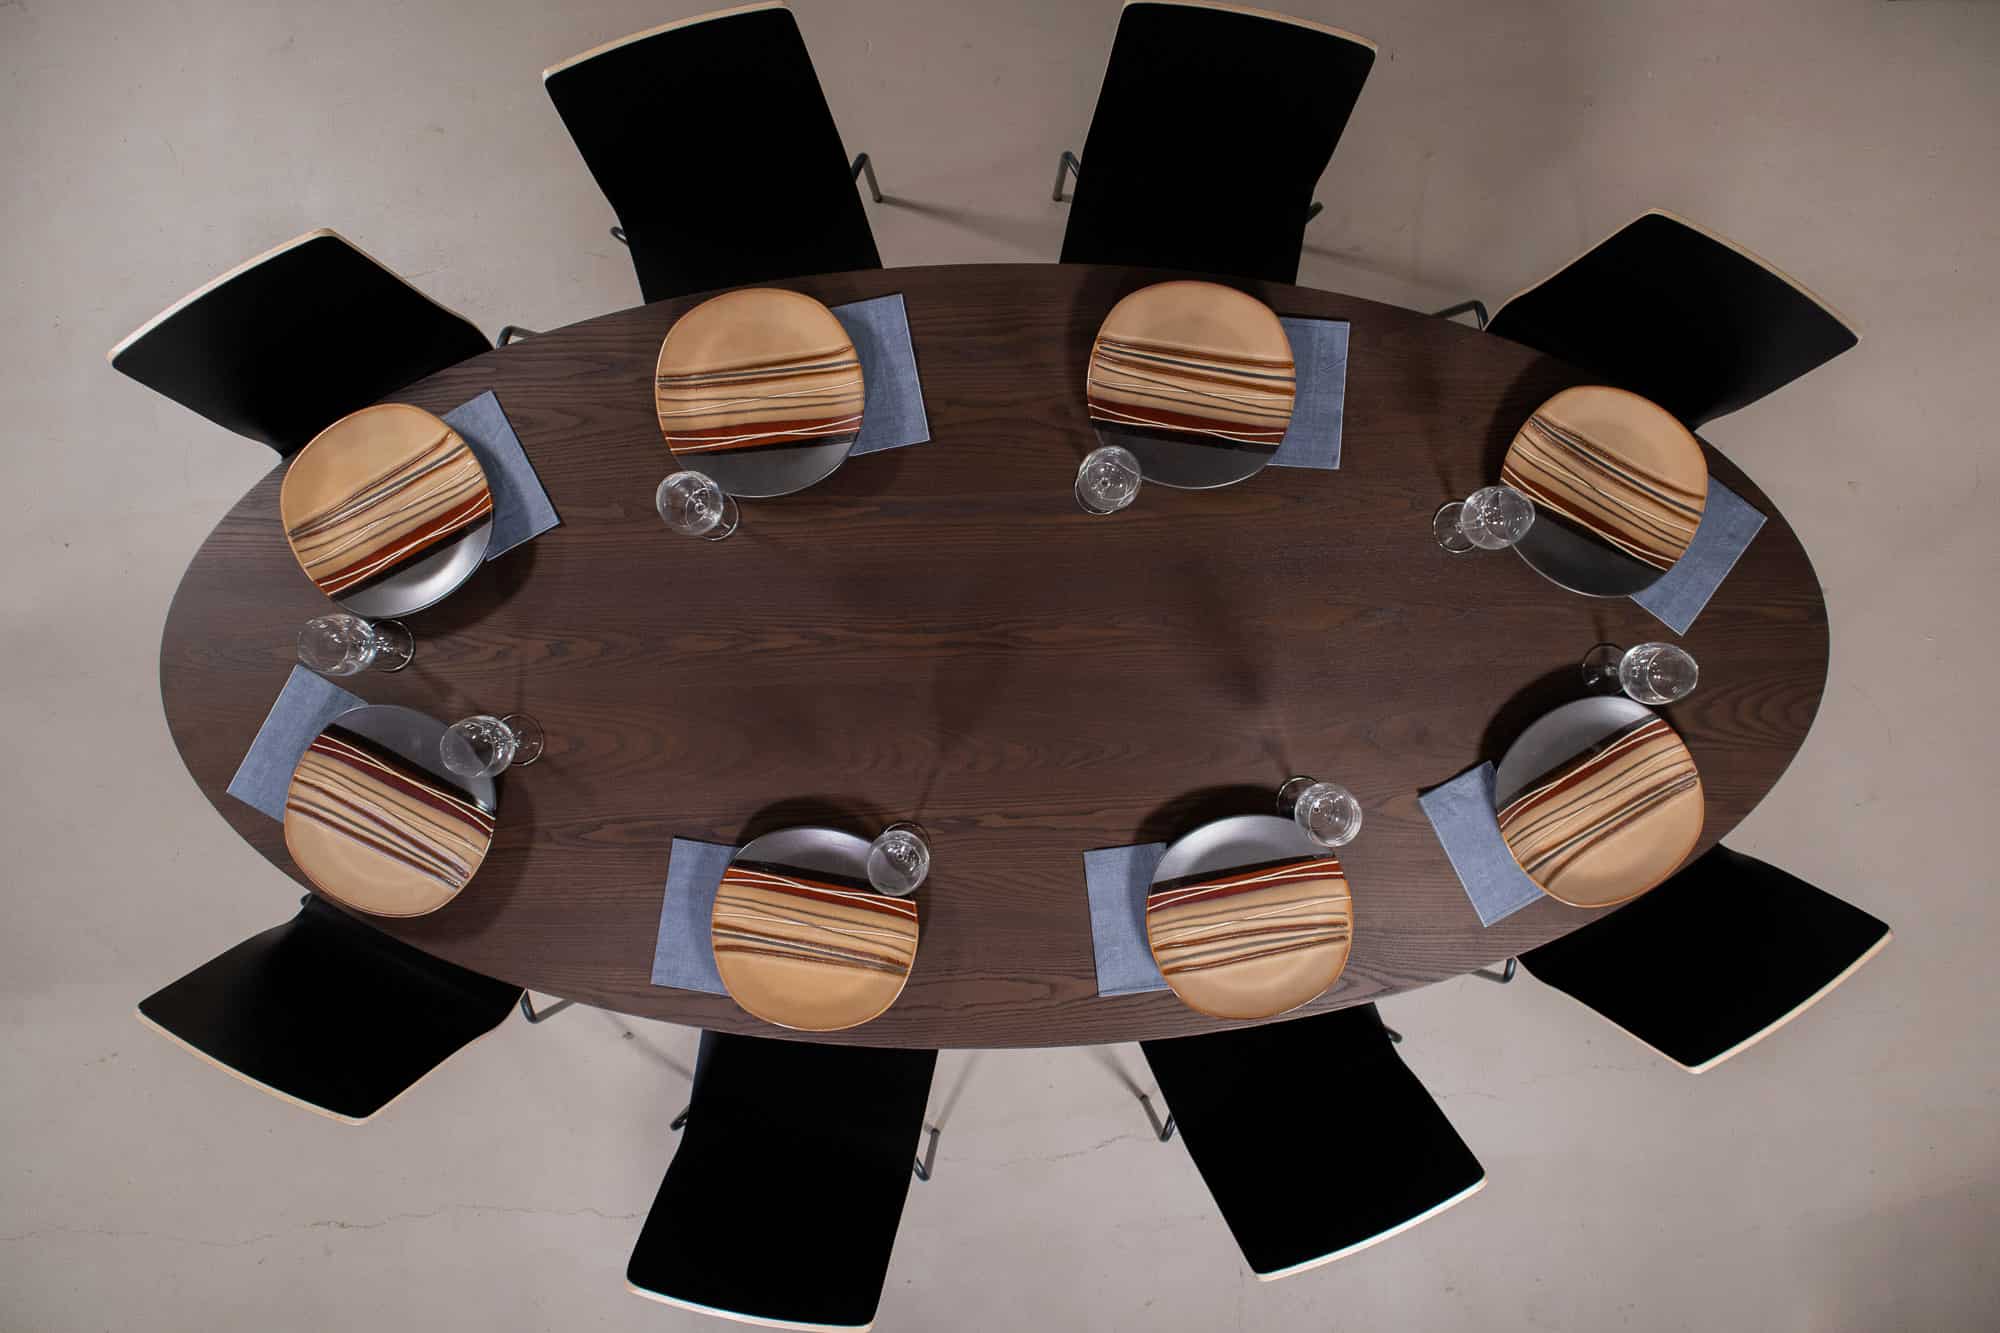 Elliptical oval oak table on a cone base in espresso